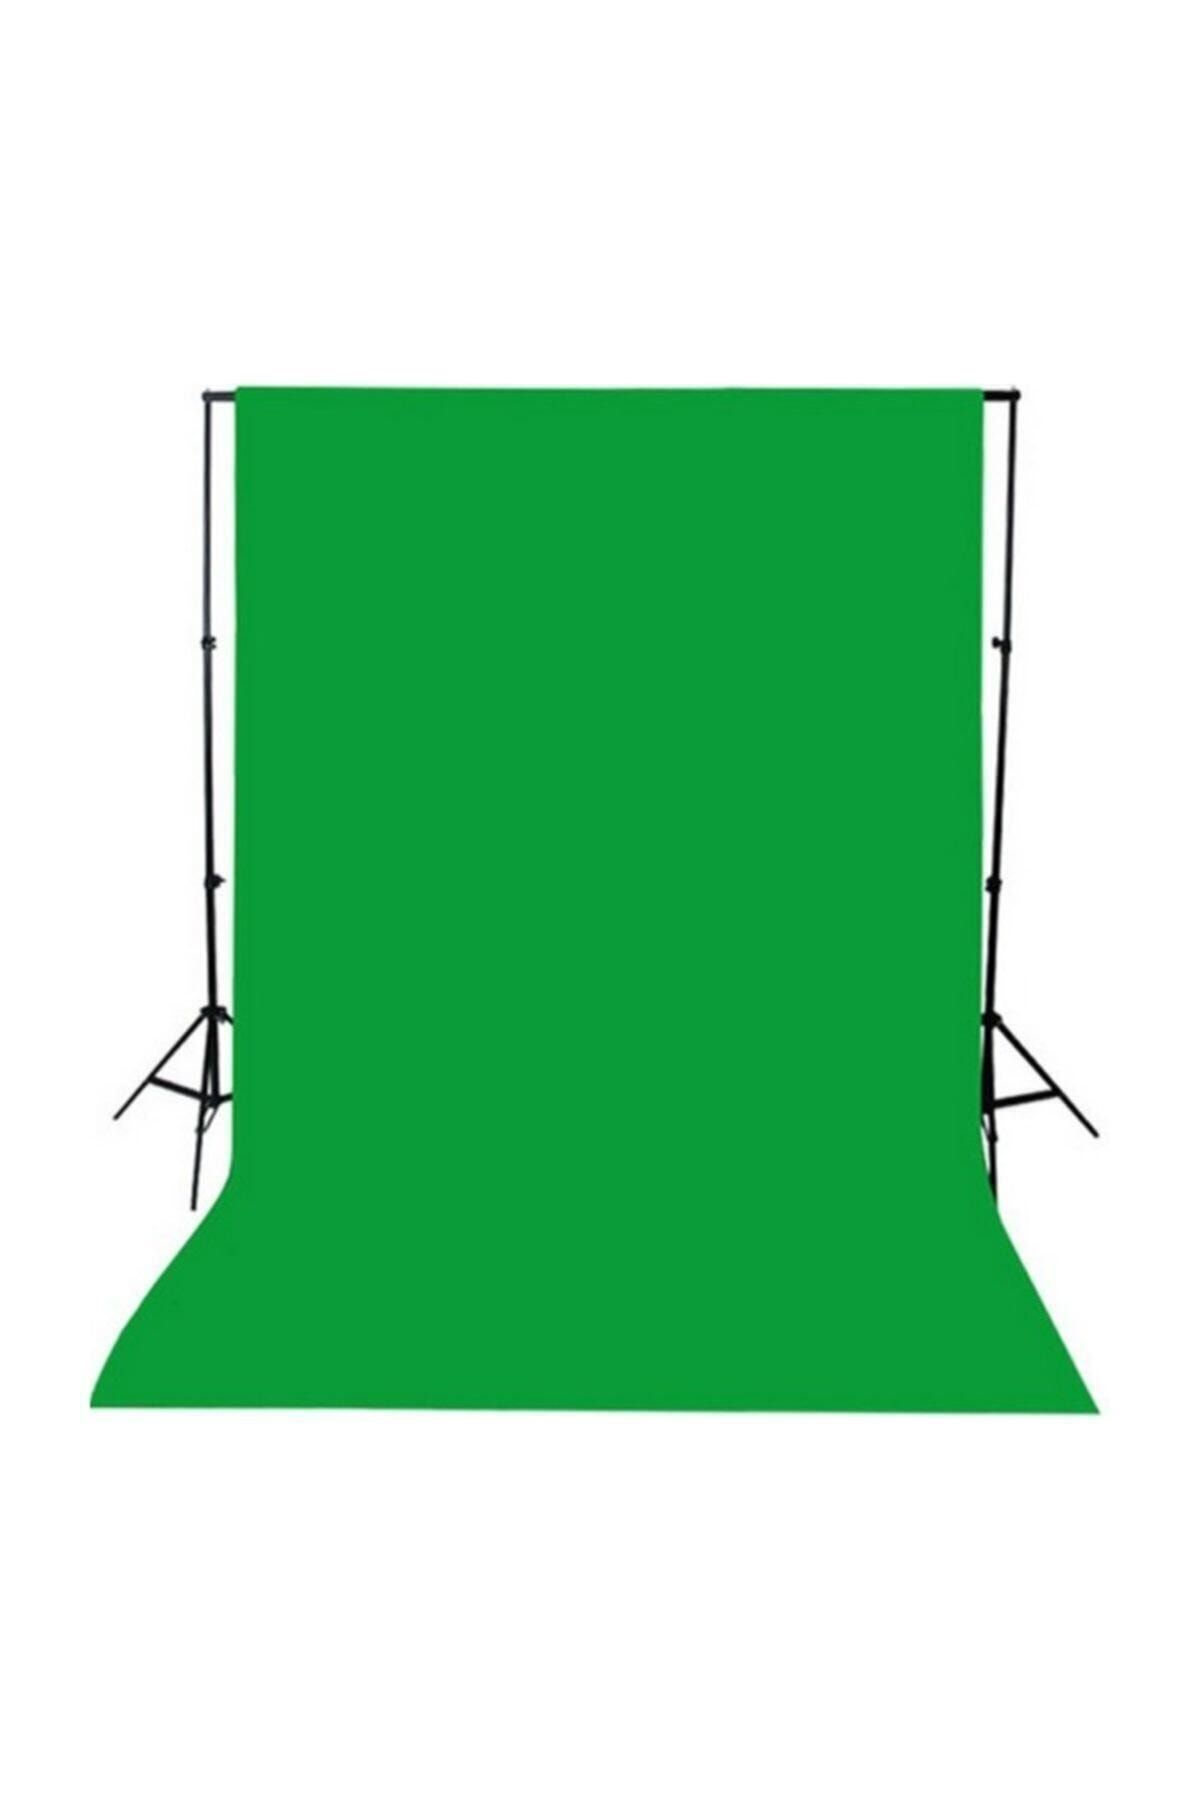 Deyatech Chromakey-green Screen Yeşil Fon Perde (3xm) +fon Stand